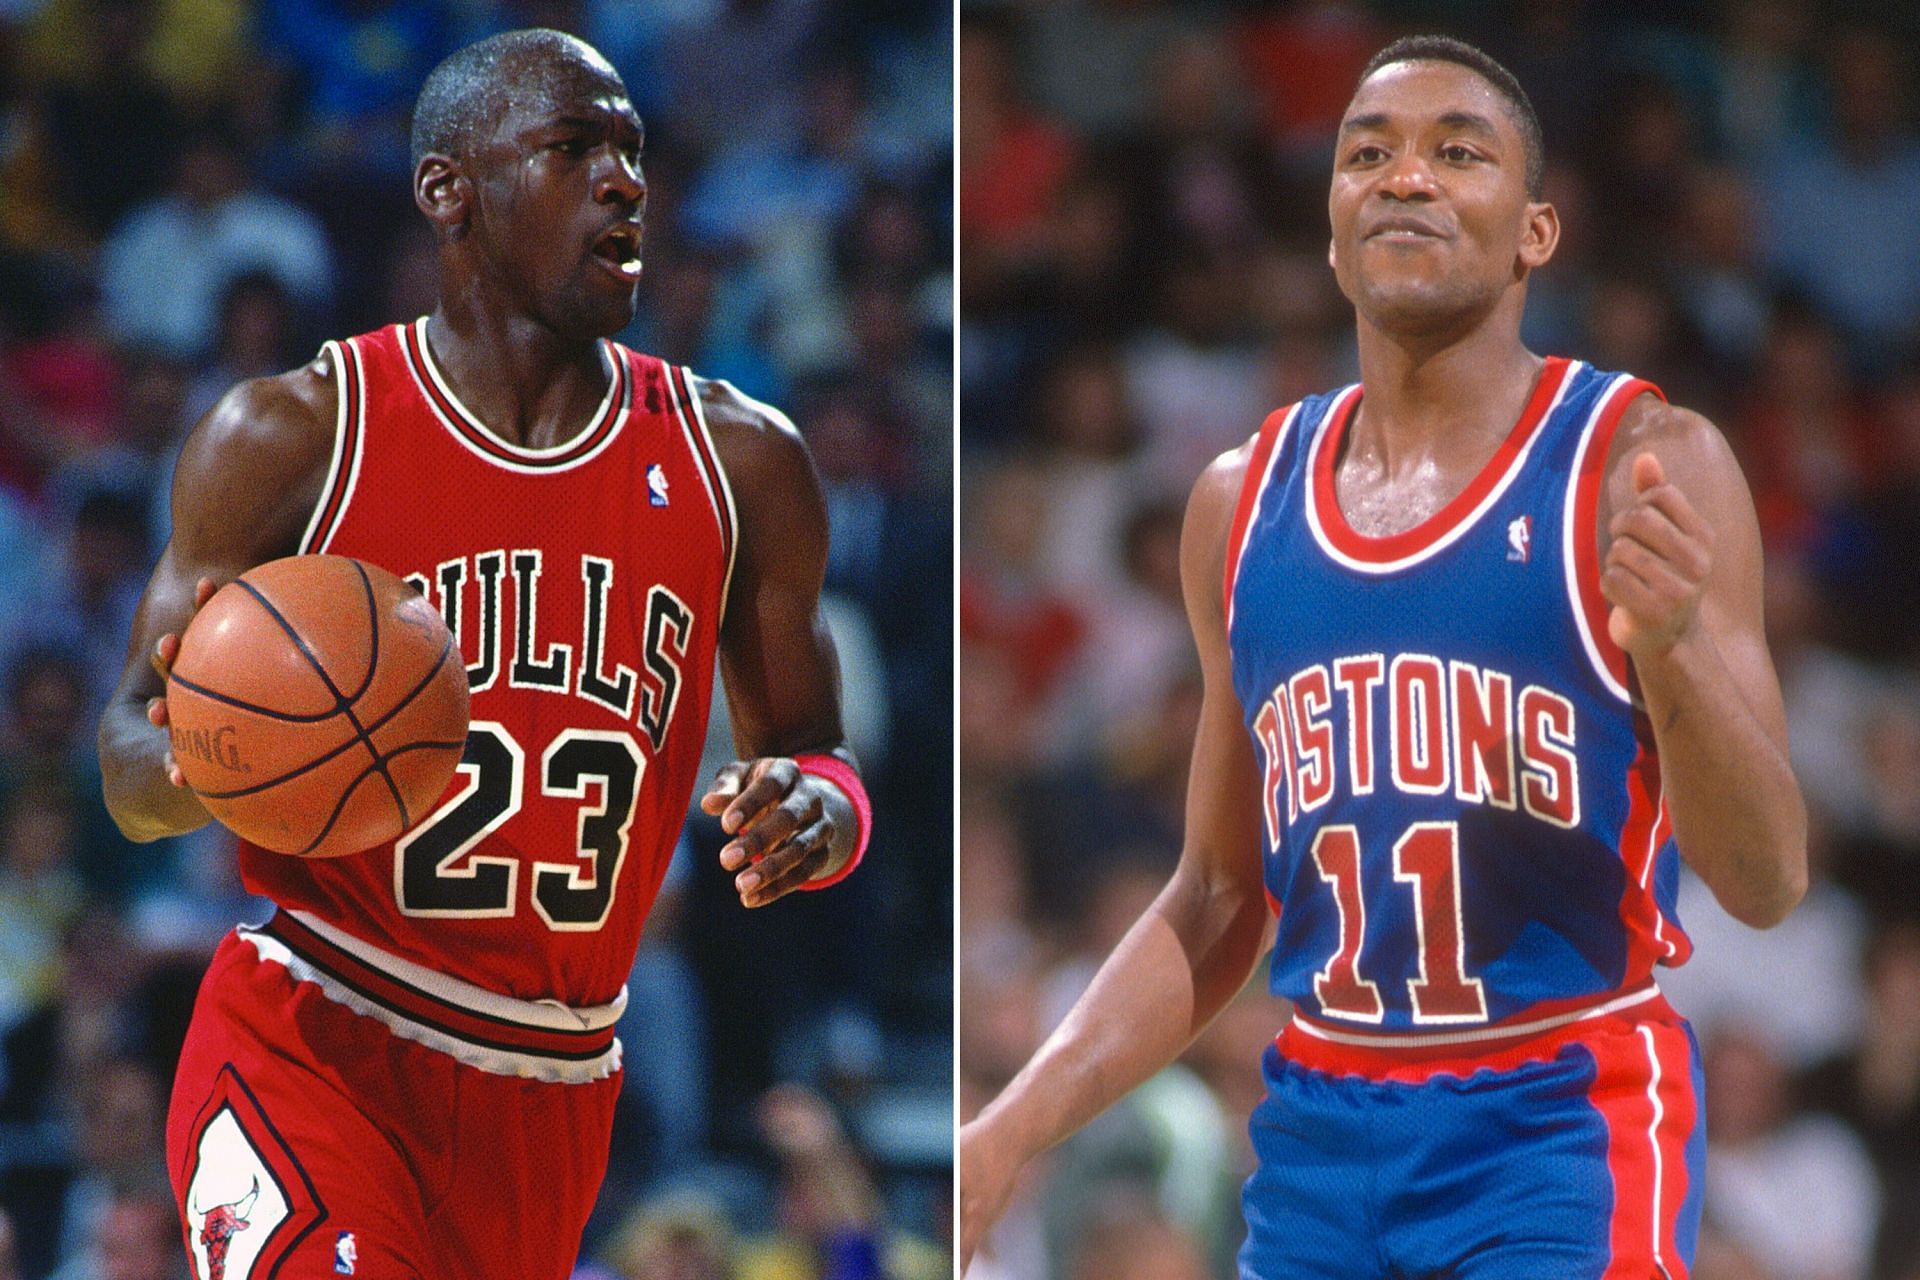 Chicago Bulls legend Michael Jordan and Detroit Pistons legend Isiah Thomas